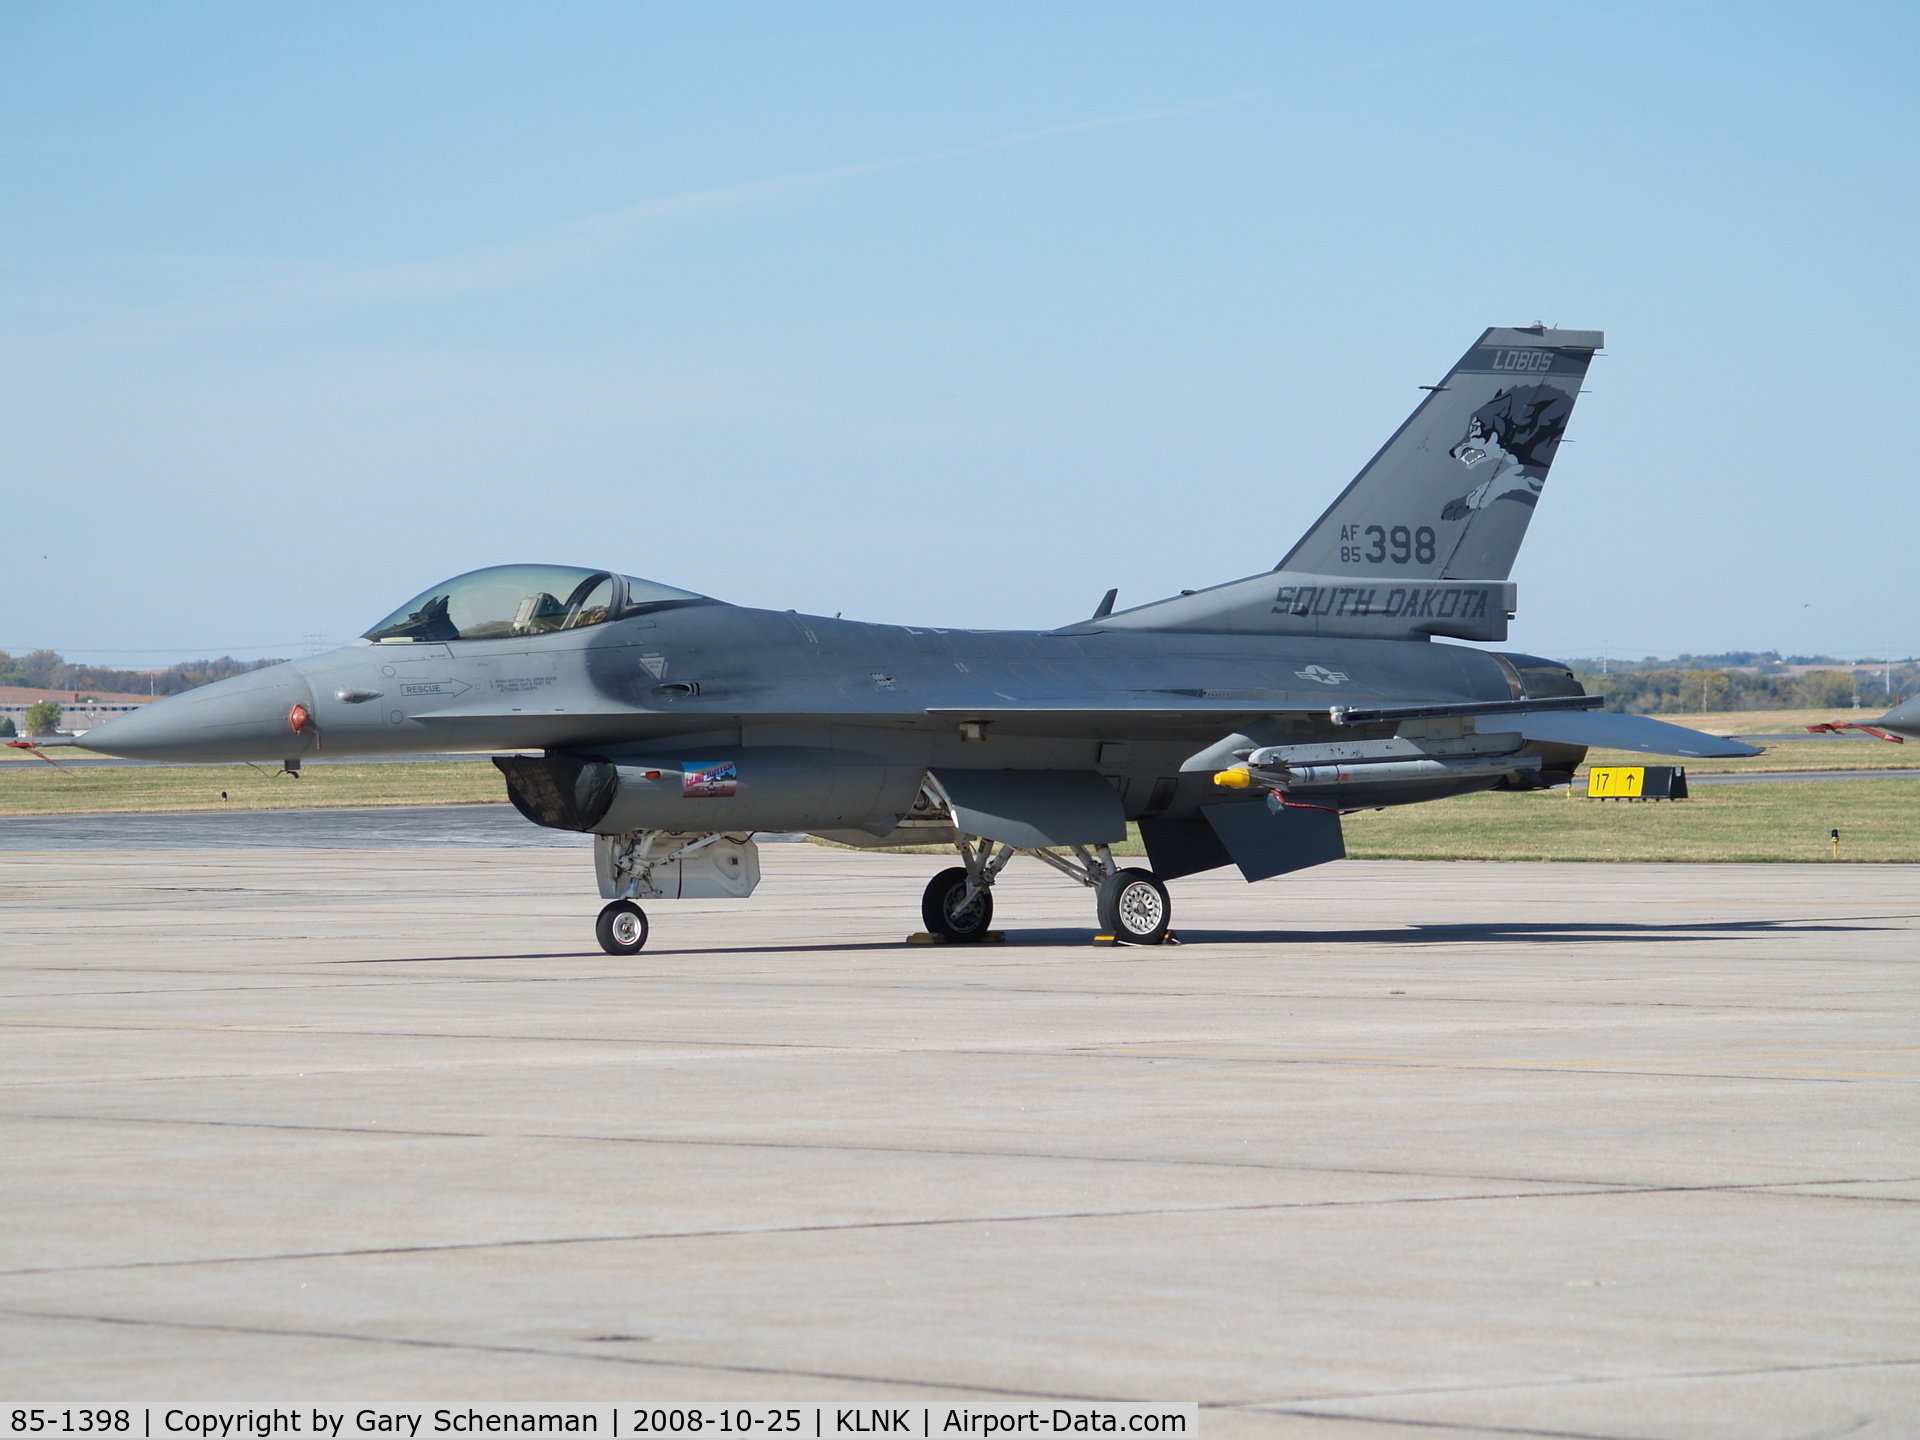 85-1398, 1985 General Dynamics F-16C Fighting Falcon C/N 5C-178, F-16 FIGHTING FALCON FROM SOUTH DAKOTA